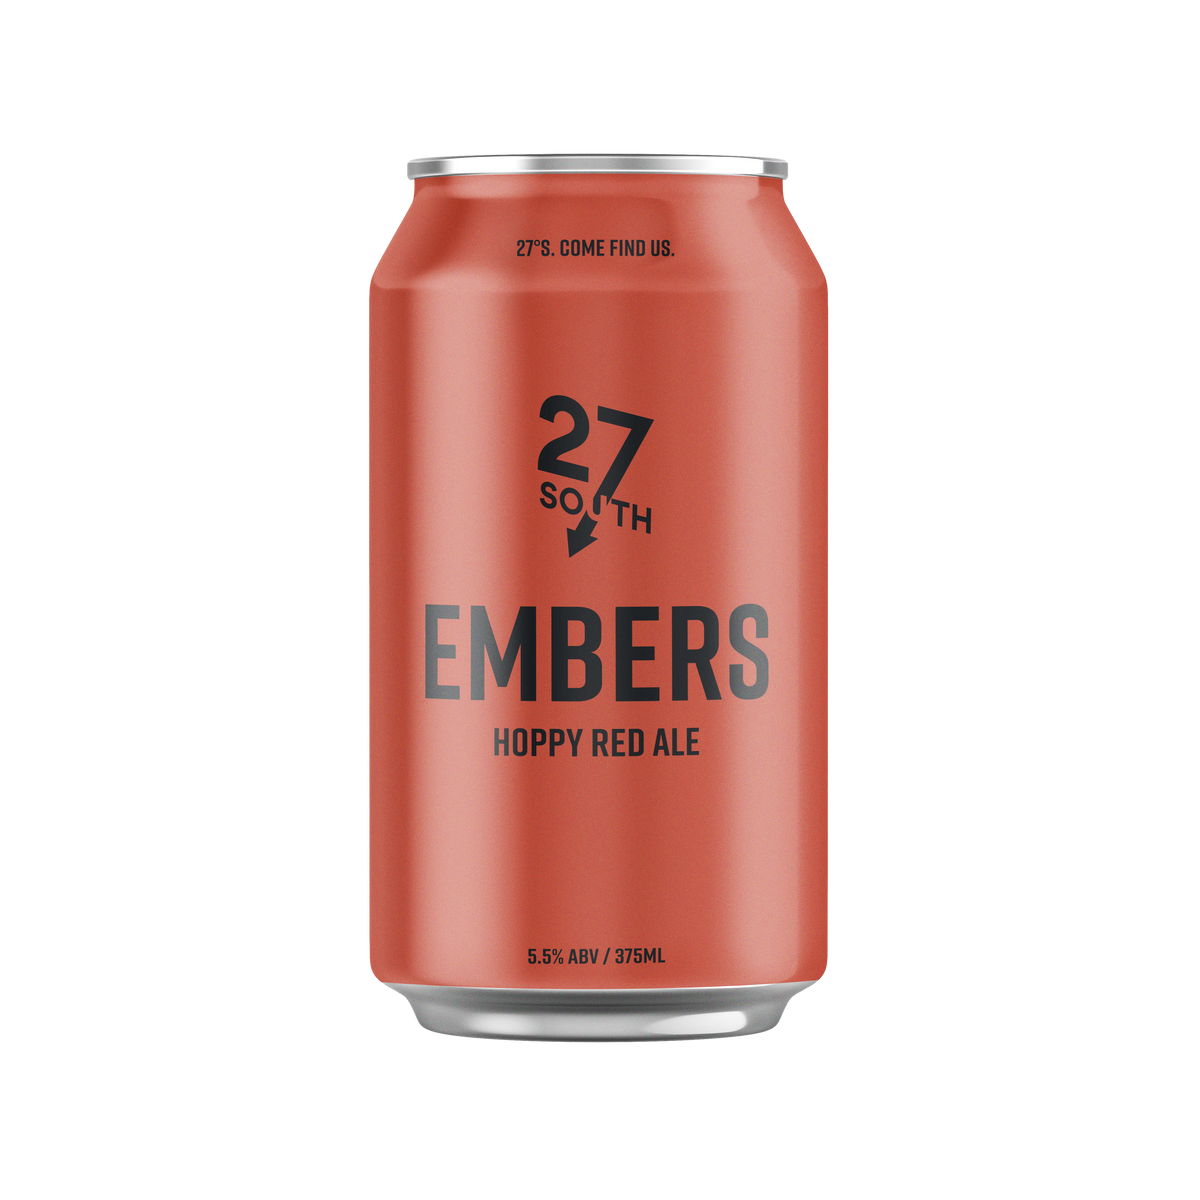 Embers – Hoppy Red Ale